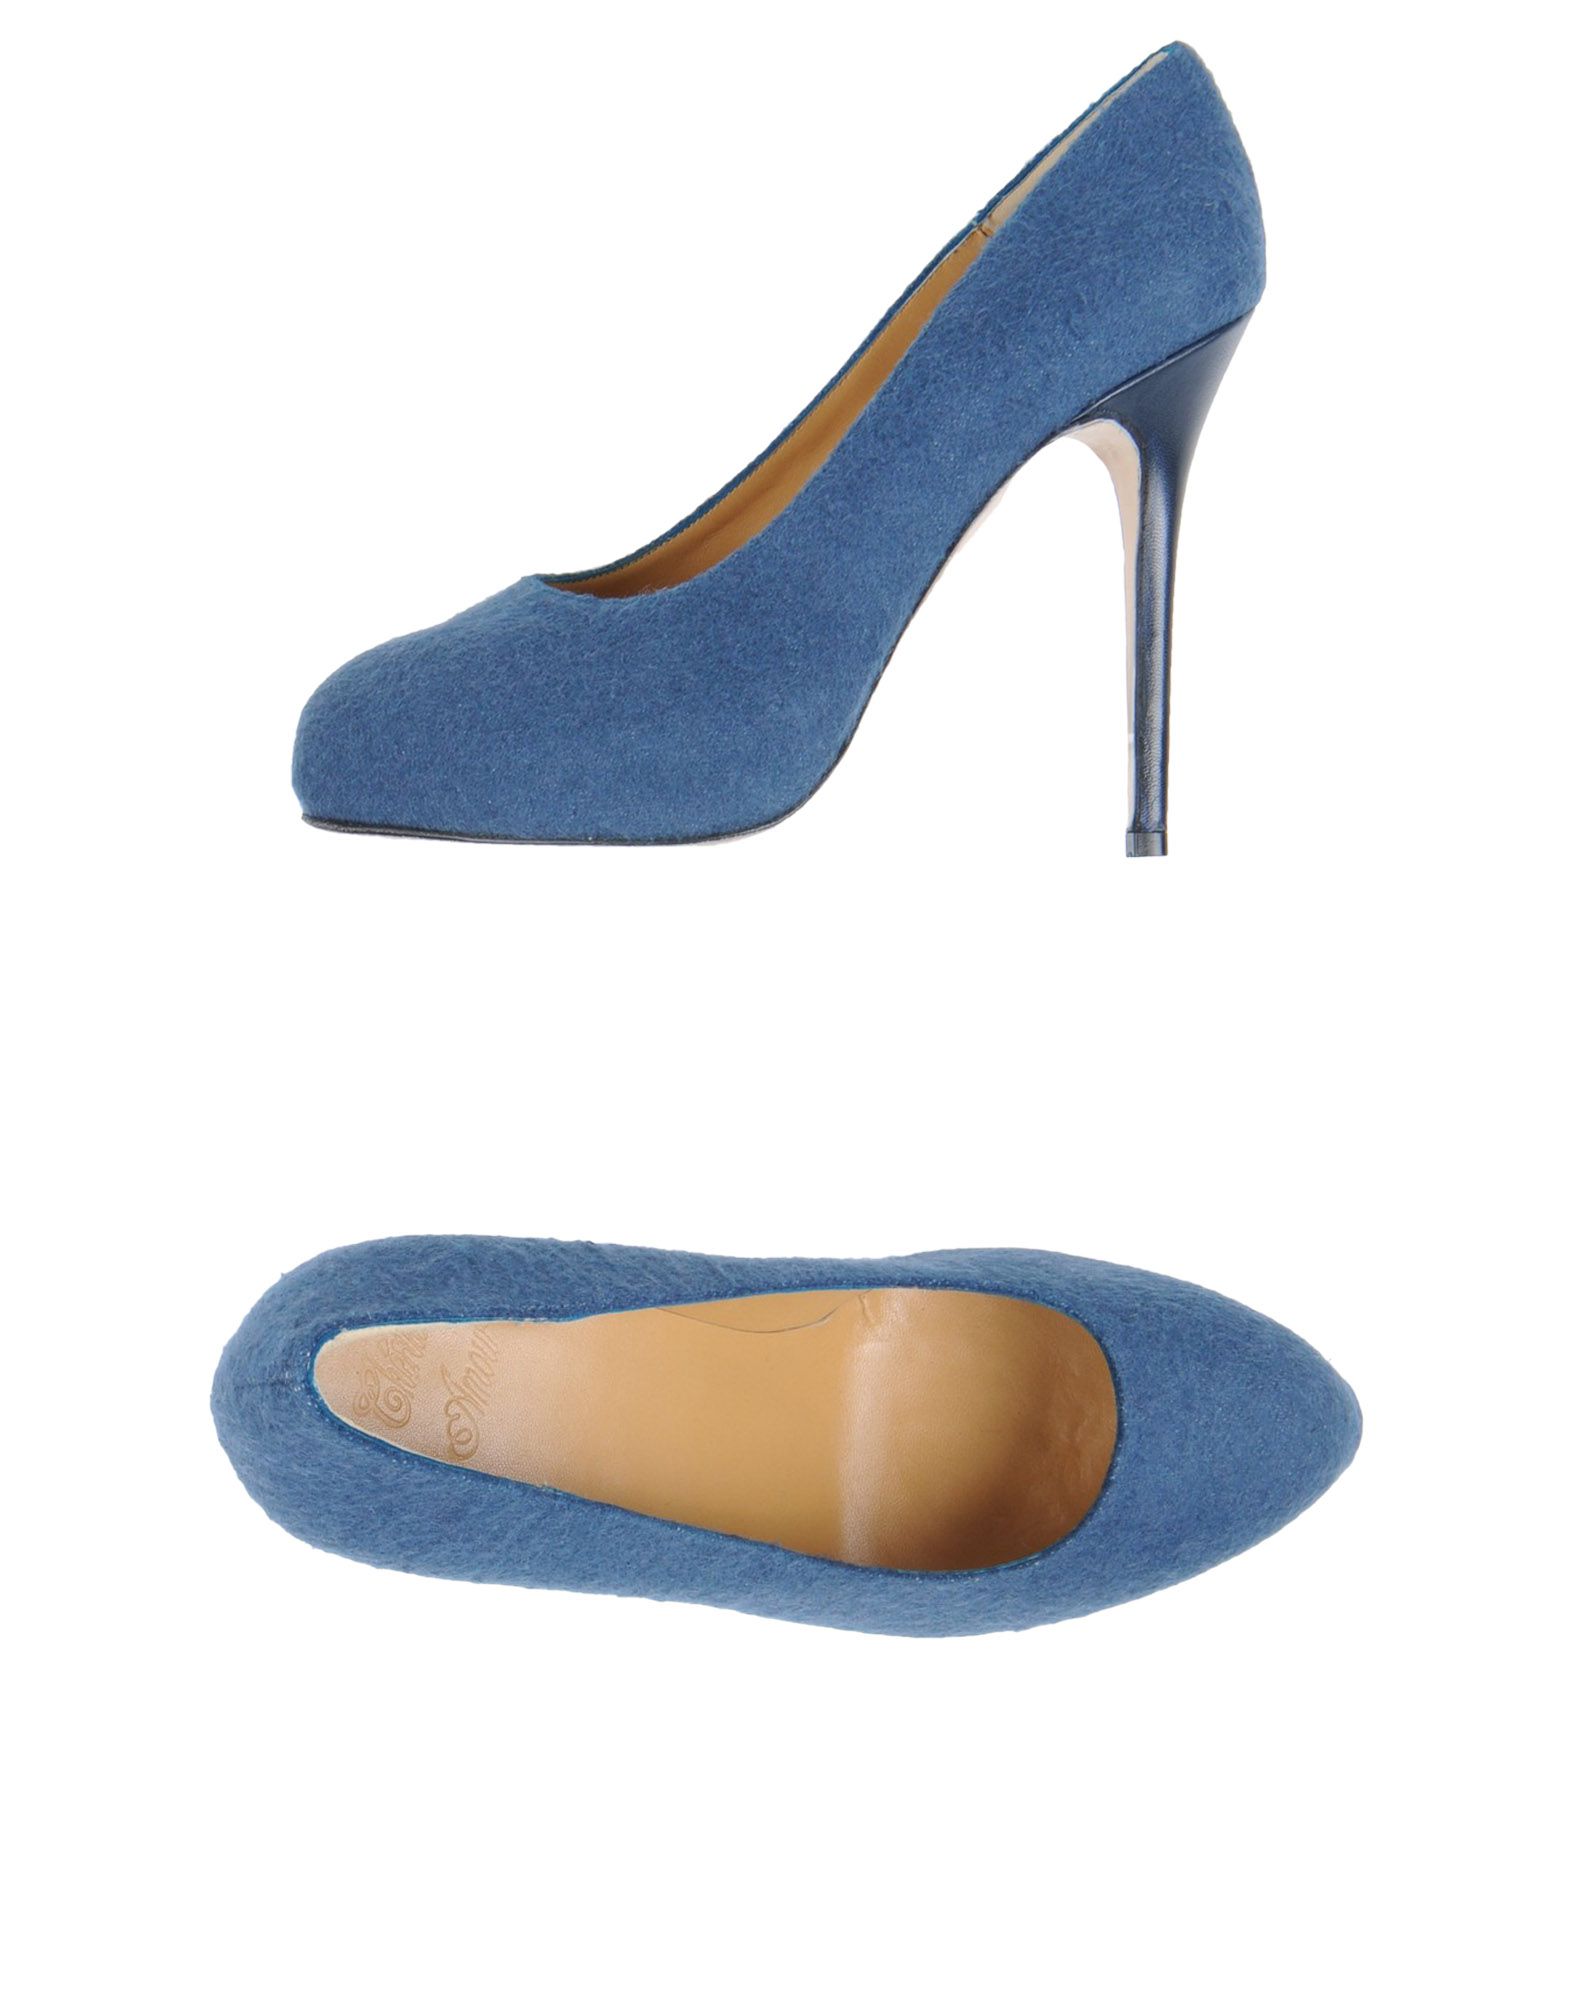 Foto chÉrie amour zapatos de salón plataforma Mujer Azul marino foto 577602